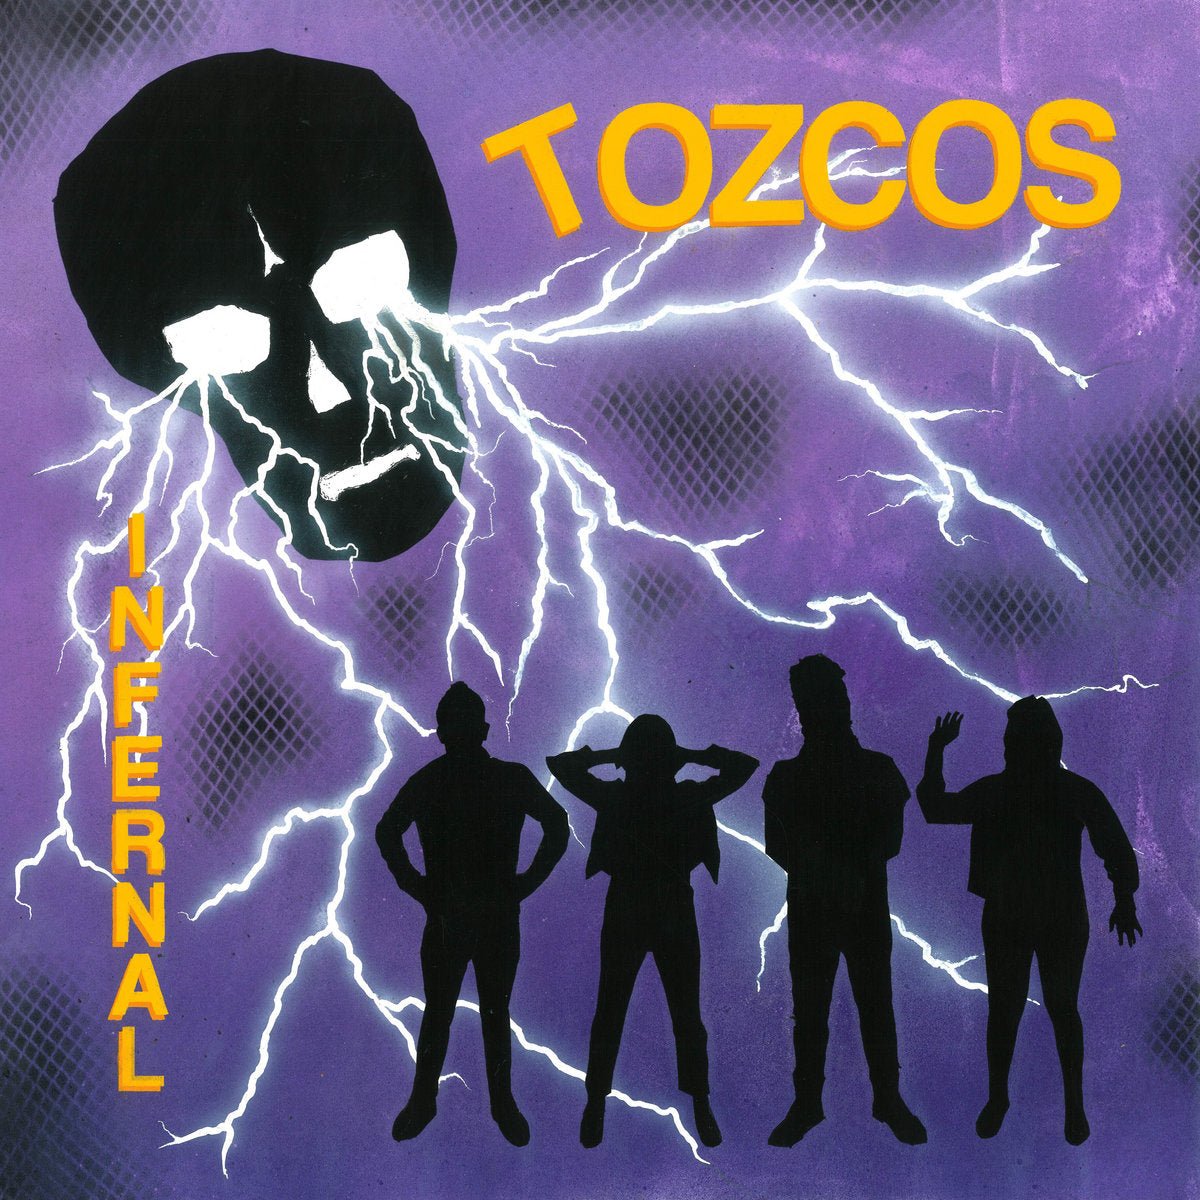 Tozcos - Infernal LP - Vinyl - Quality Control